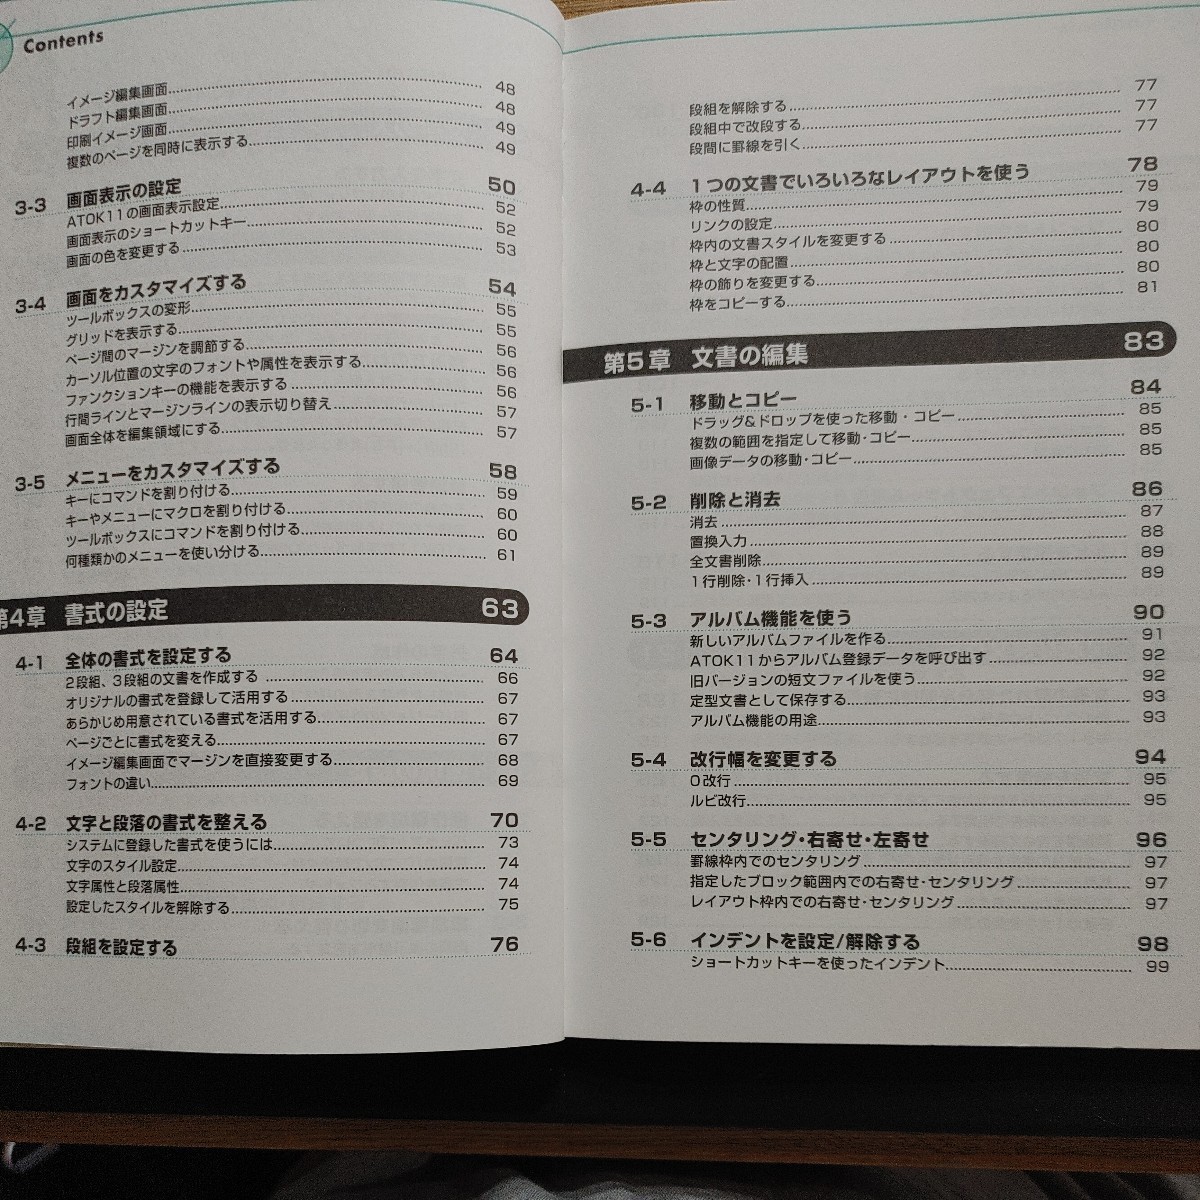 [ secondhand book .] one Taro 8 hand book For Windows 95 NT SBklieitib/... one ( separate volume ) ISBN4-7973-0248-8 SoftBank 